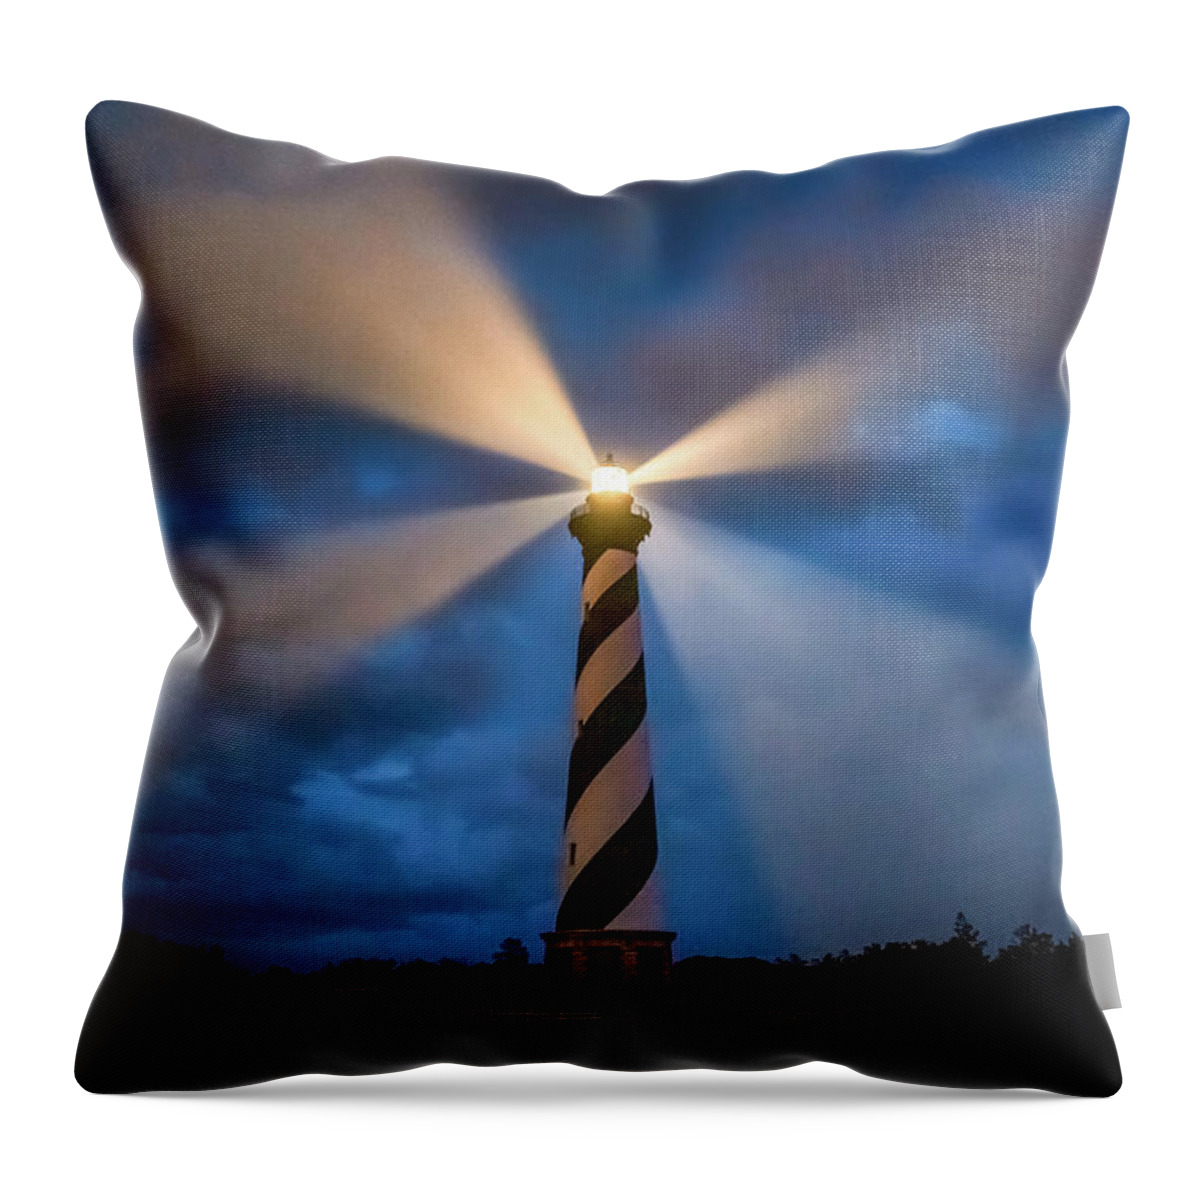 North Carolina Throw Pillow featuring the photograph The guiding light by Robert Miller